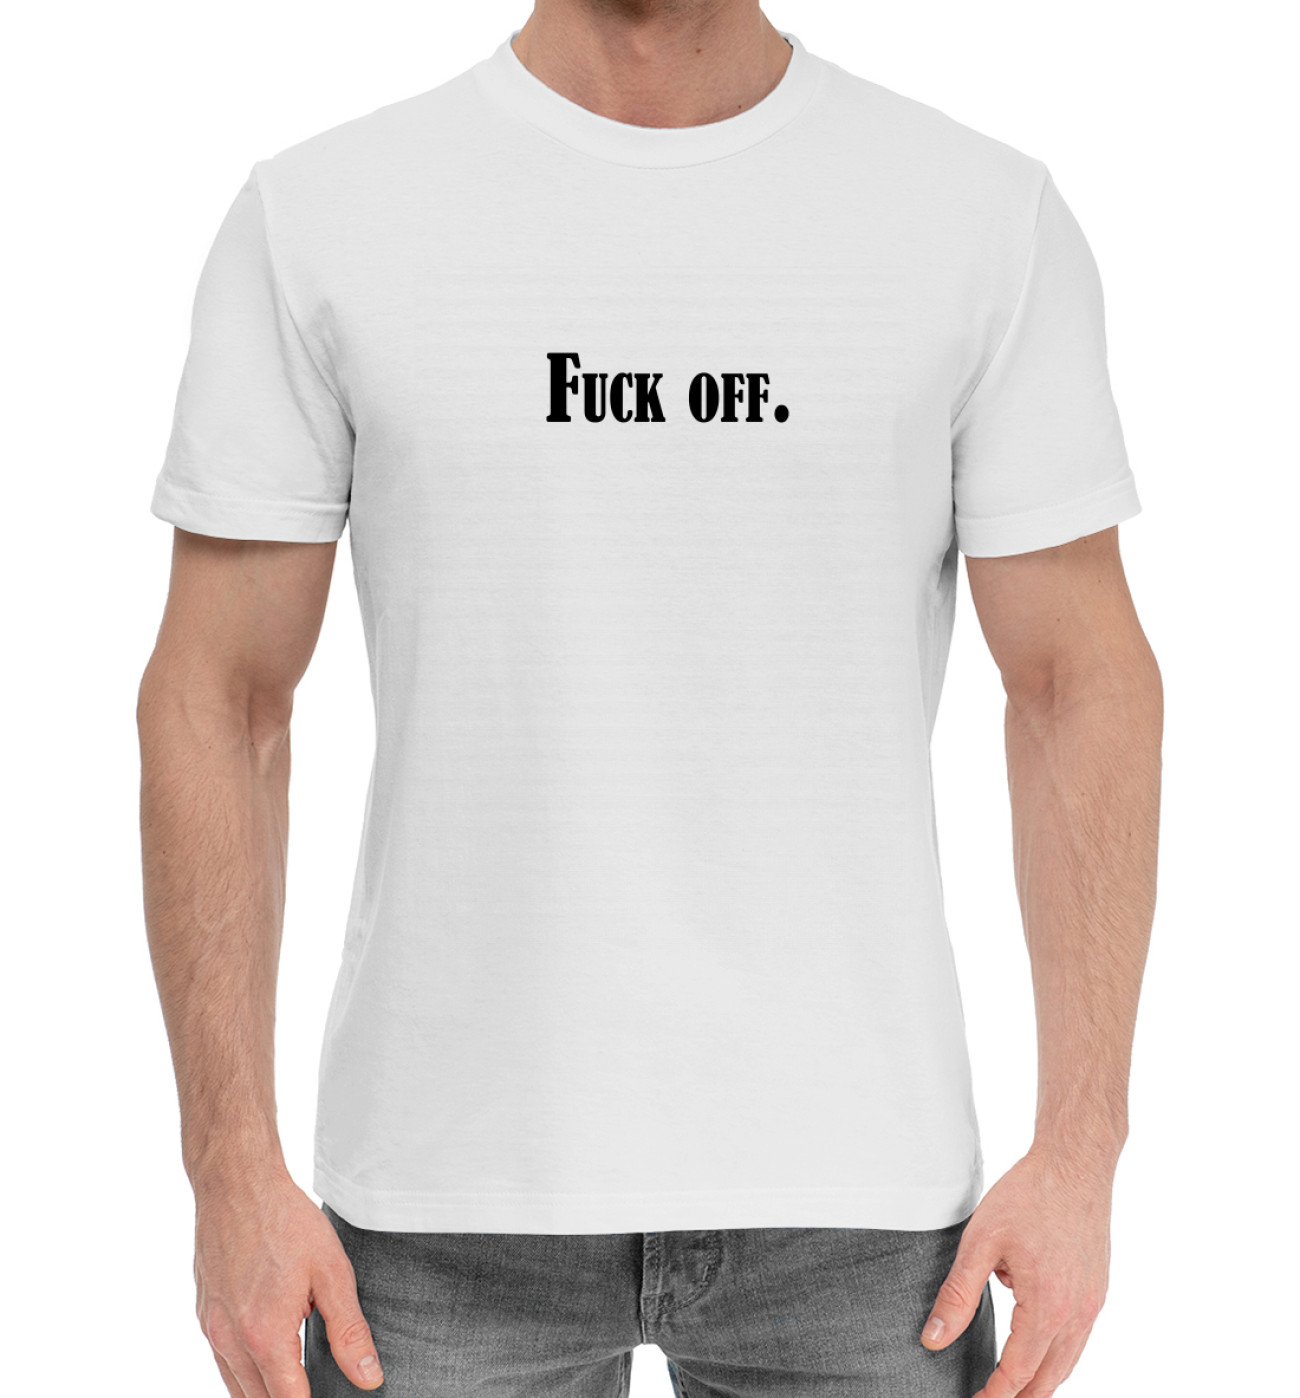 Мужская Хлопковая футболка Fuck off., артикул: CEN-705376-hfu-2